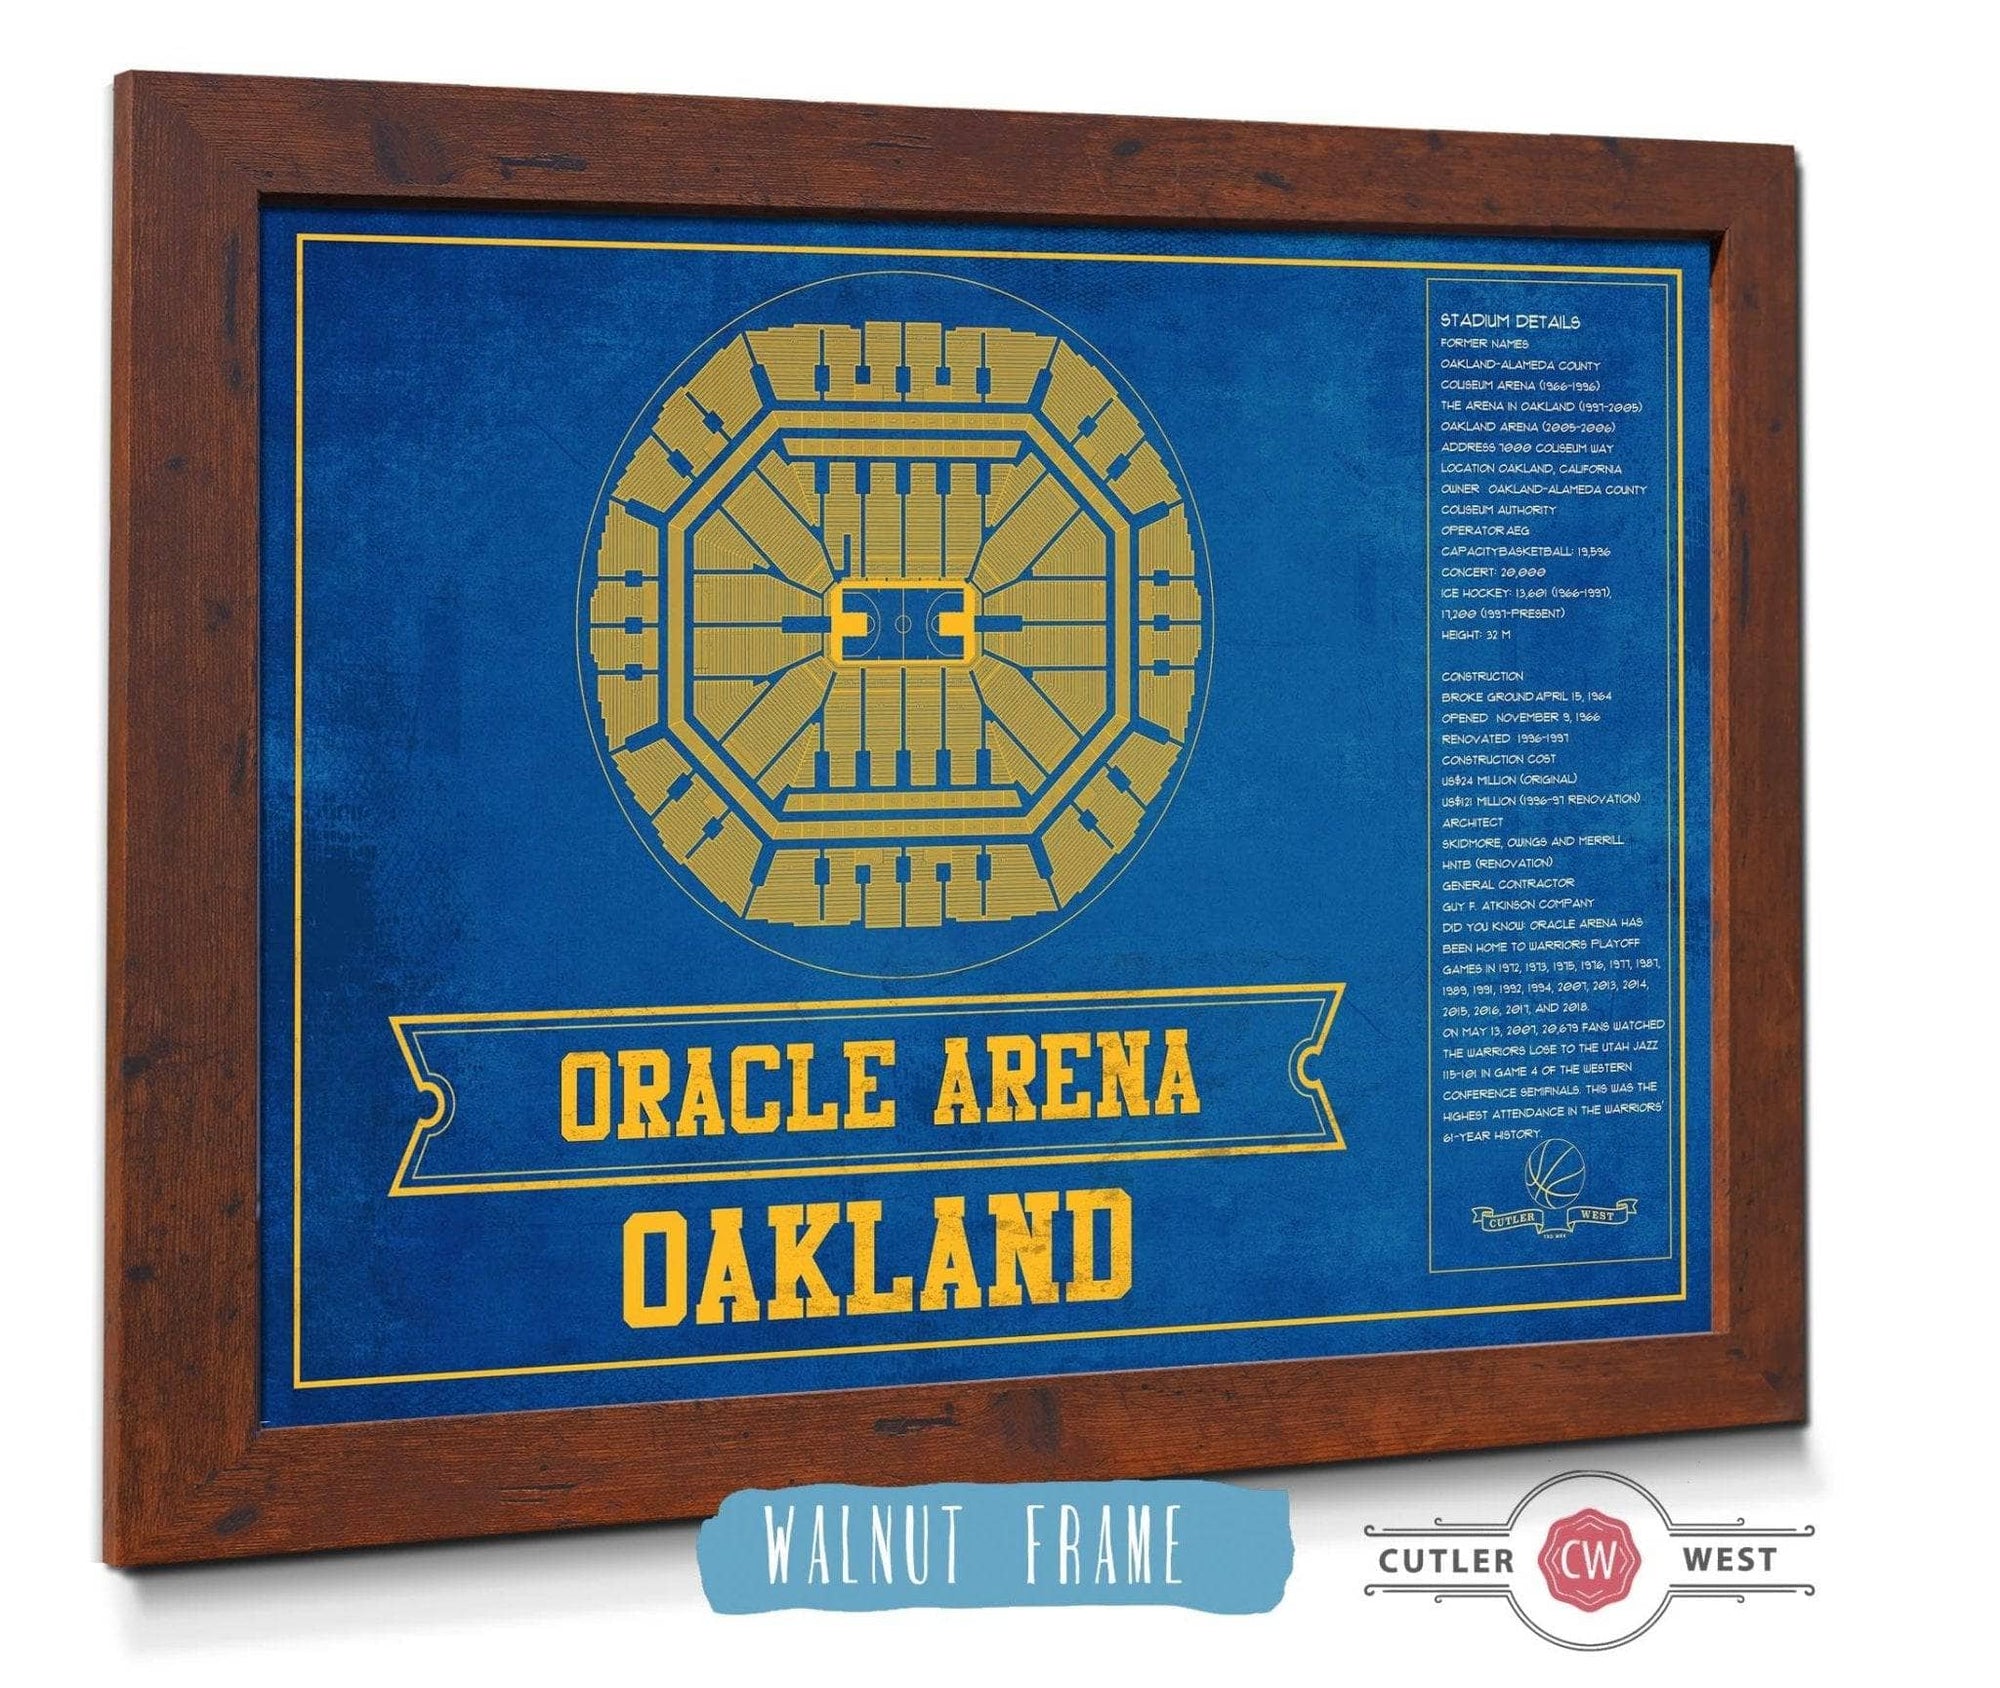 Cutler West Basketball Collection 14" x 11" / Walnut Frame Golden State Warriors - Oracle Arena Vintage Basketball Blueprint Framed NBA Team Color Print 660987526-TEAM_76368